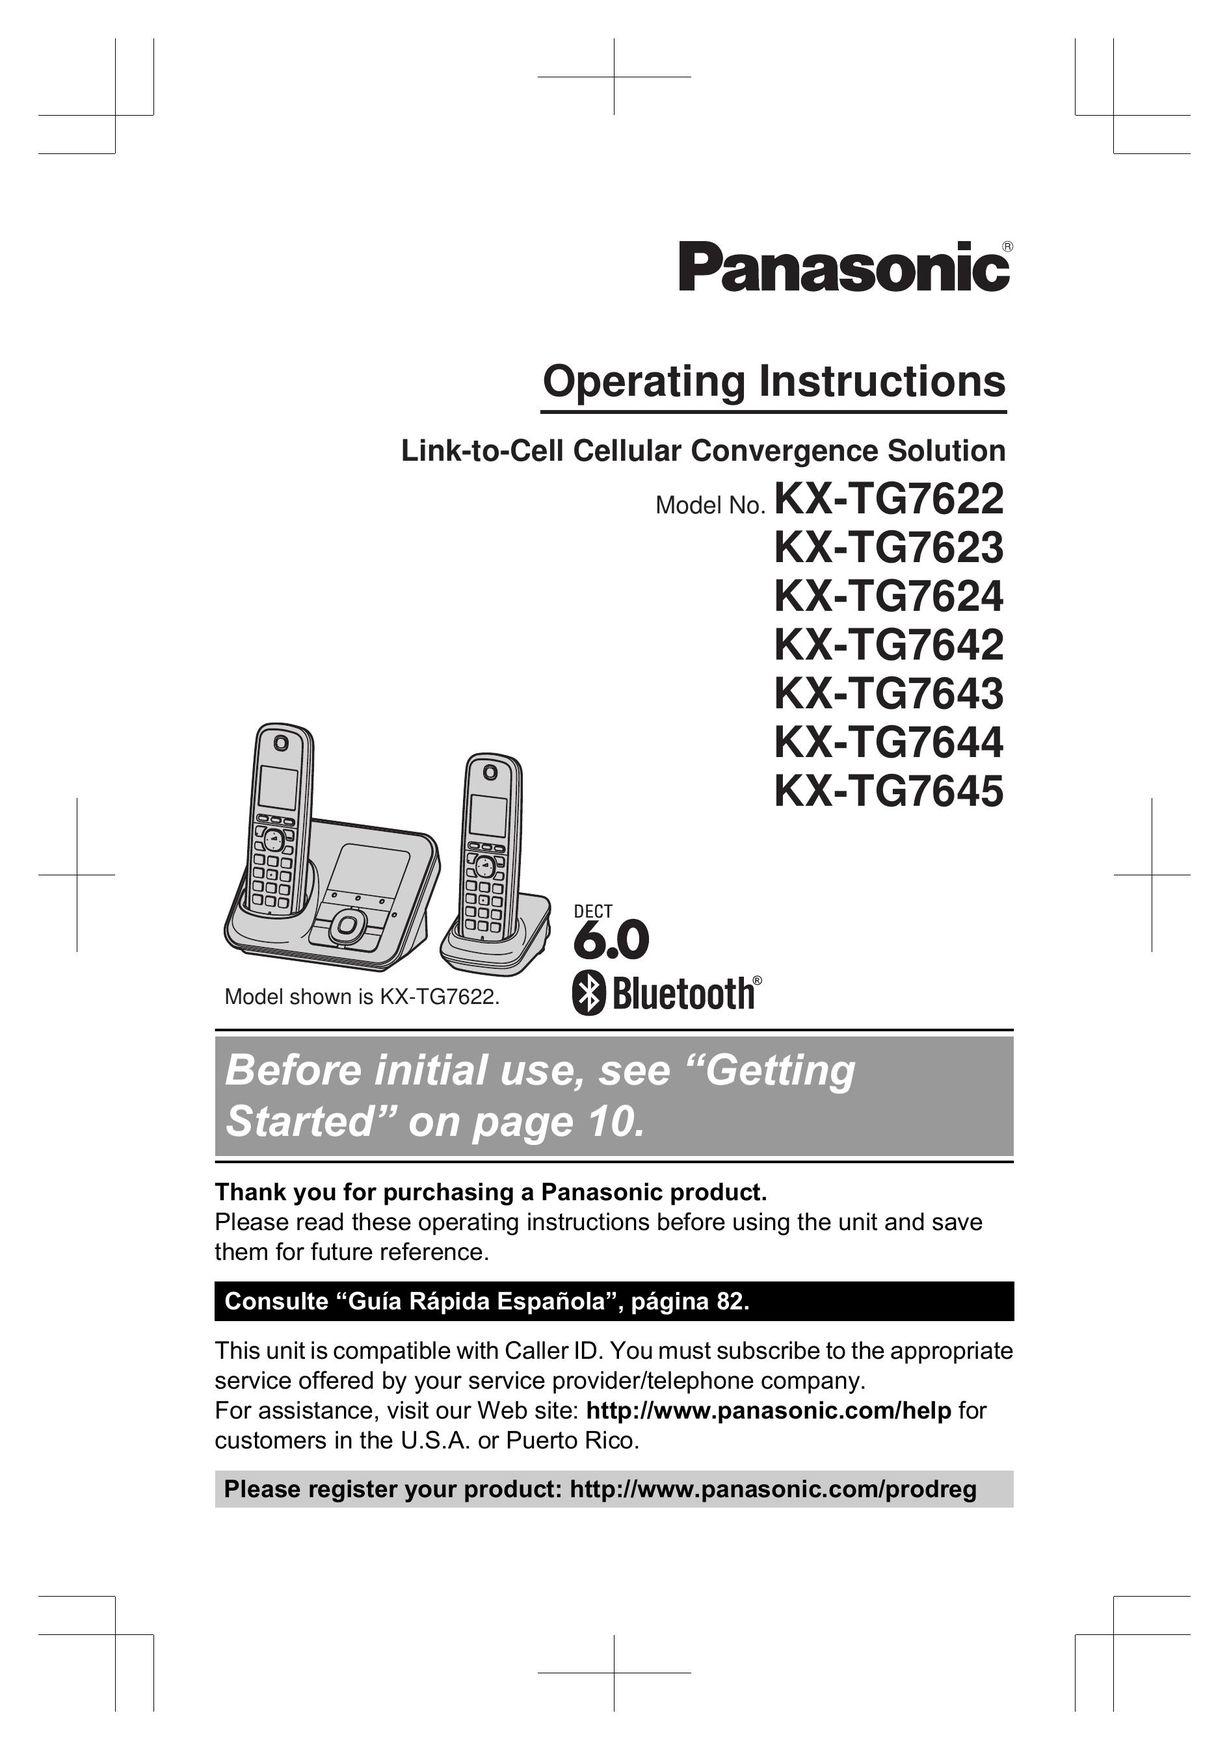 Panasonic KX-TG7624 Bluetooth Headset User Manual